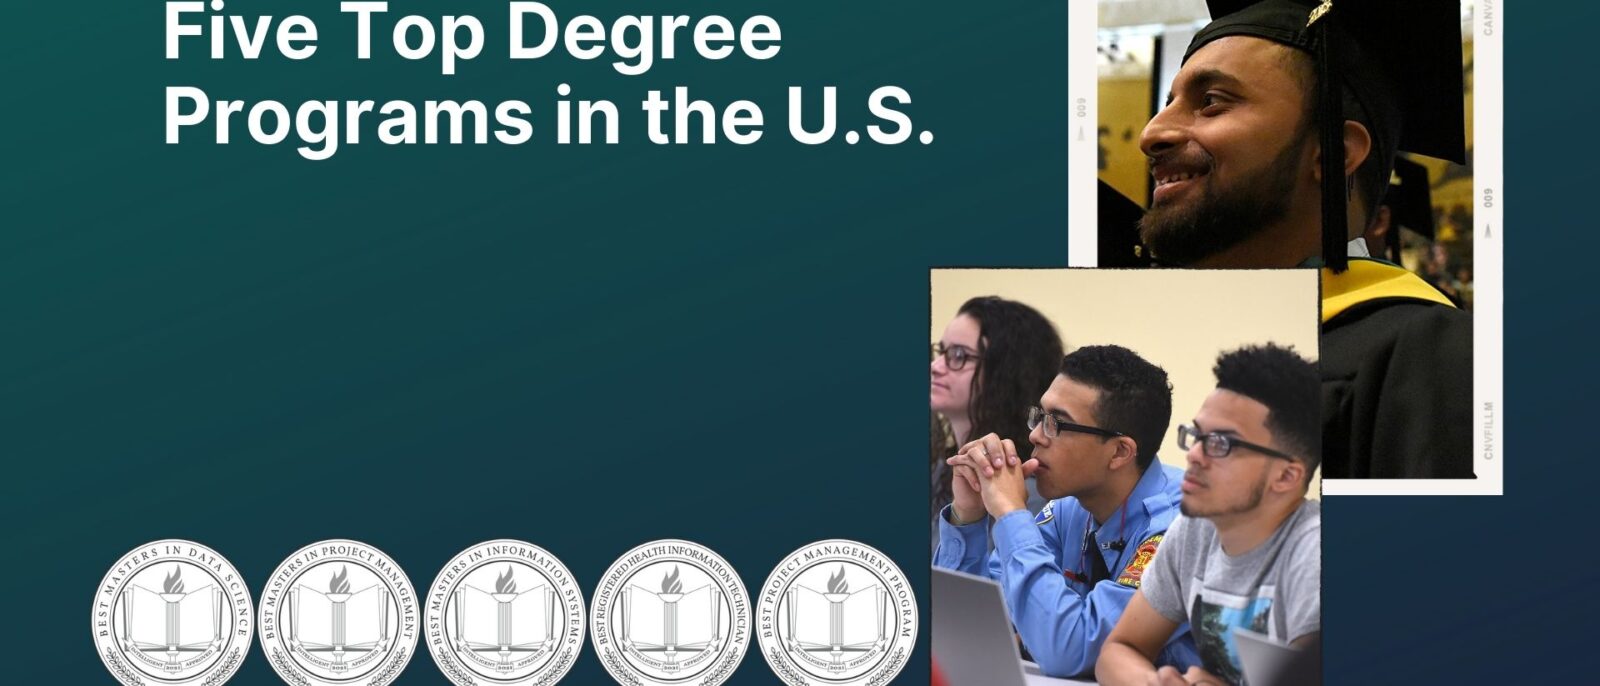 Harrisburg University Recognized for five Top Degree Programs in the U.S.